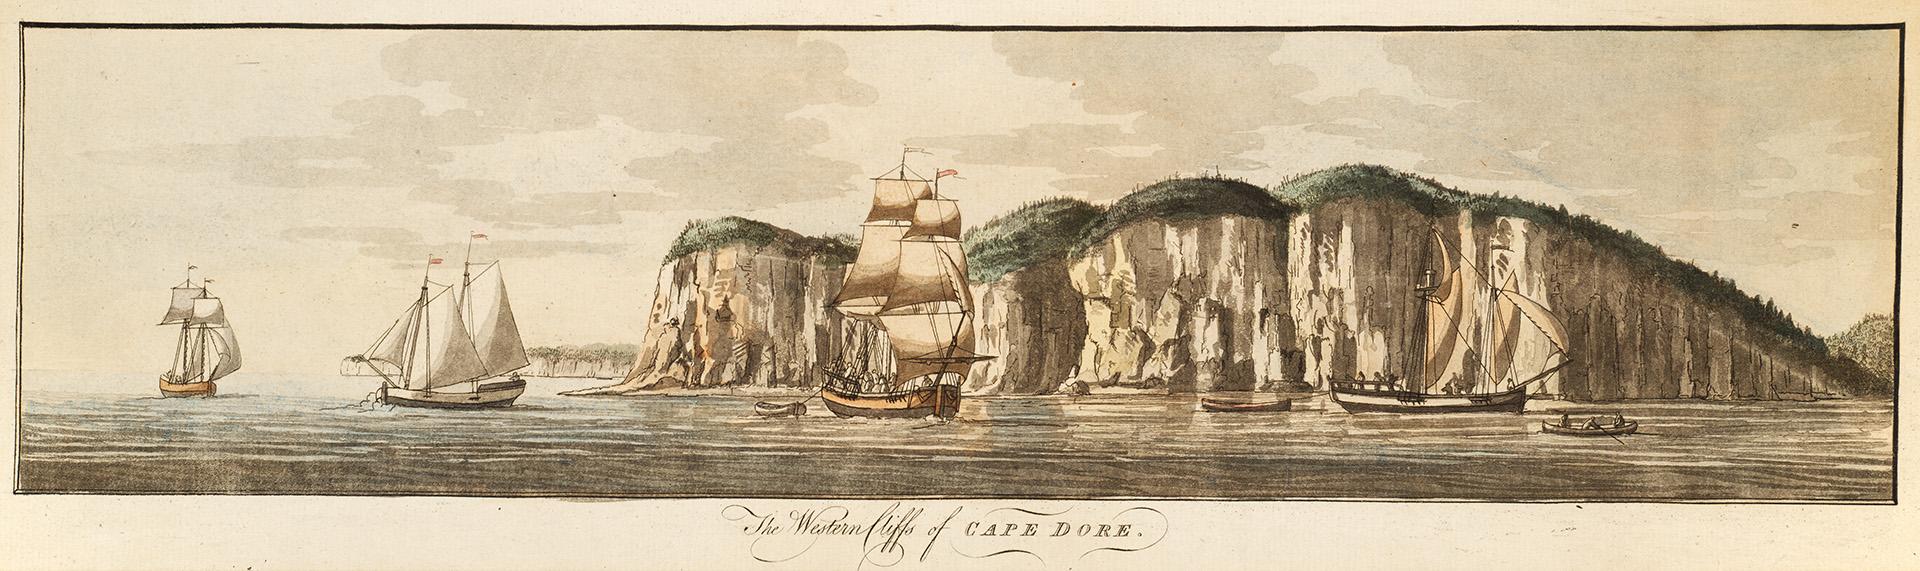 The Western Cliffs of Cape Dore (Cape d'Or, Nova Scotia)